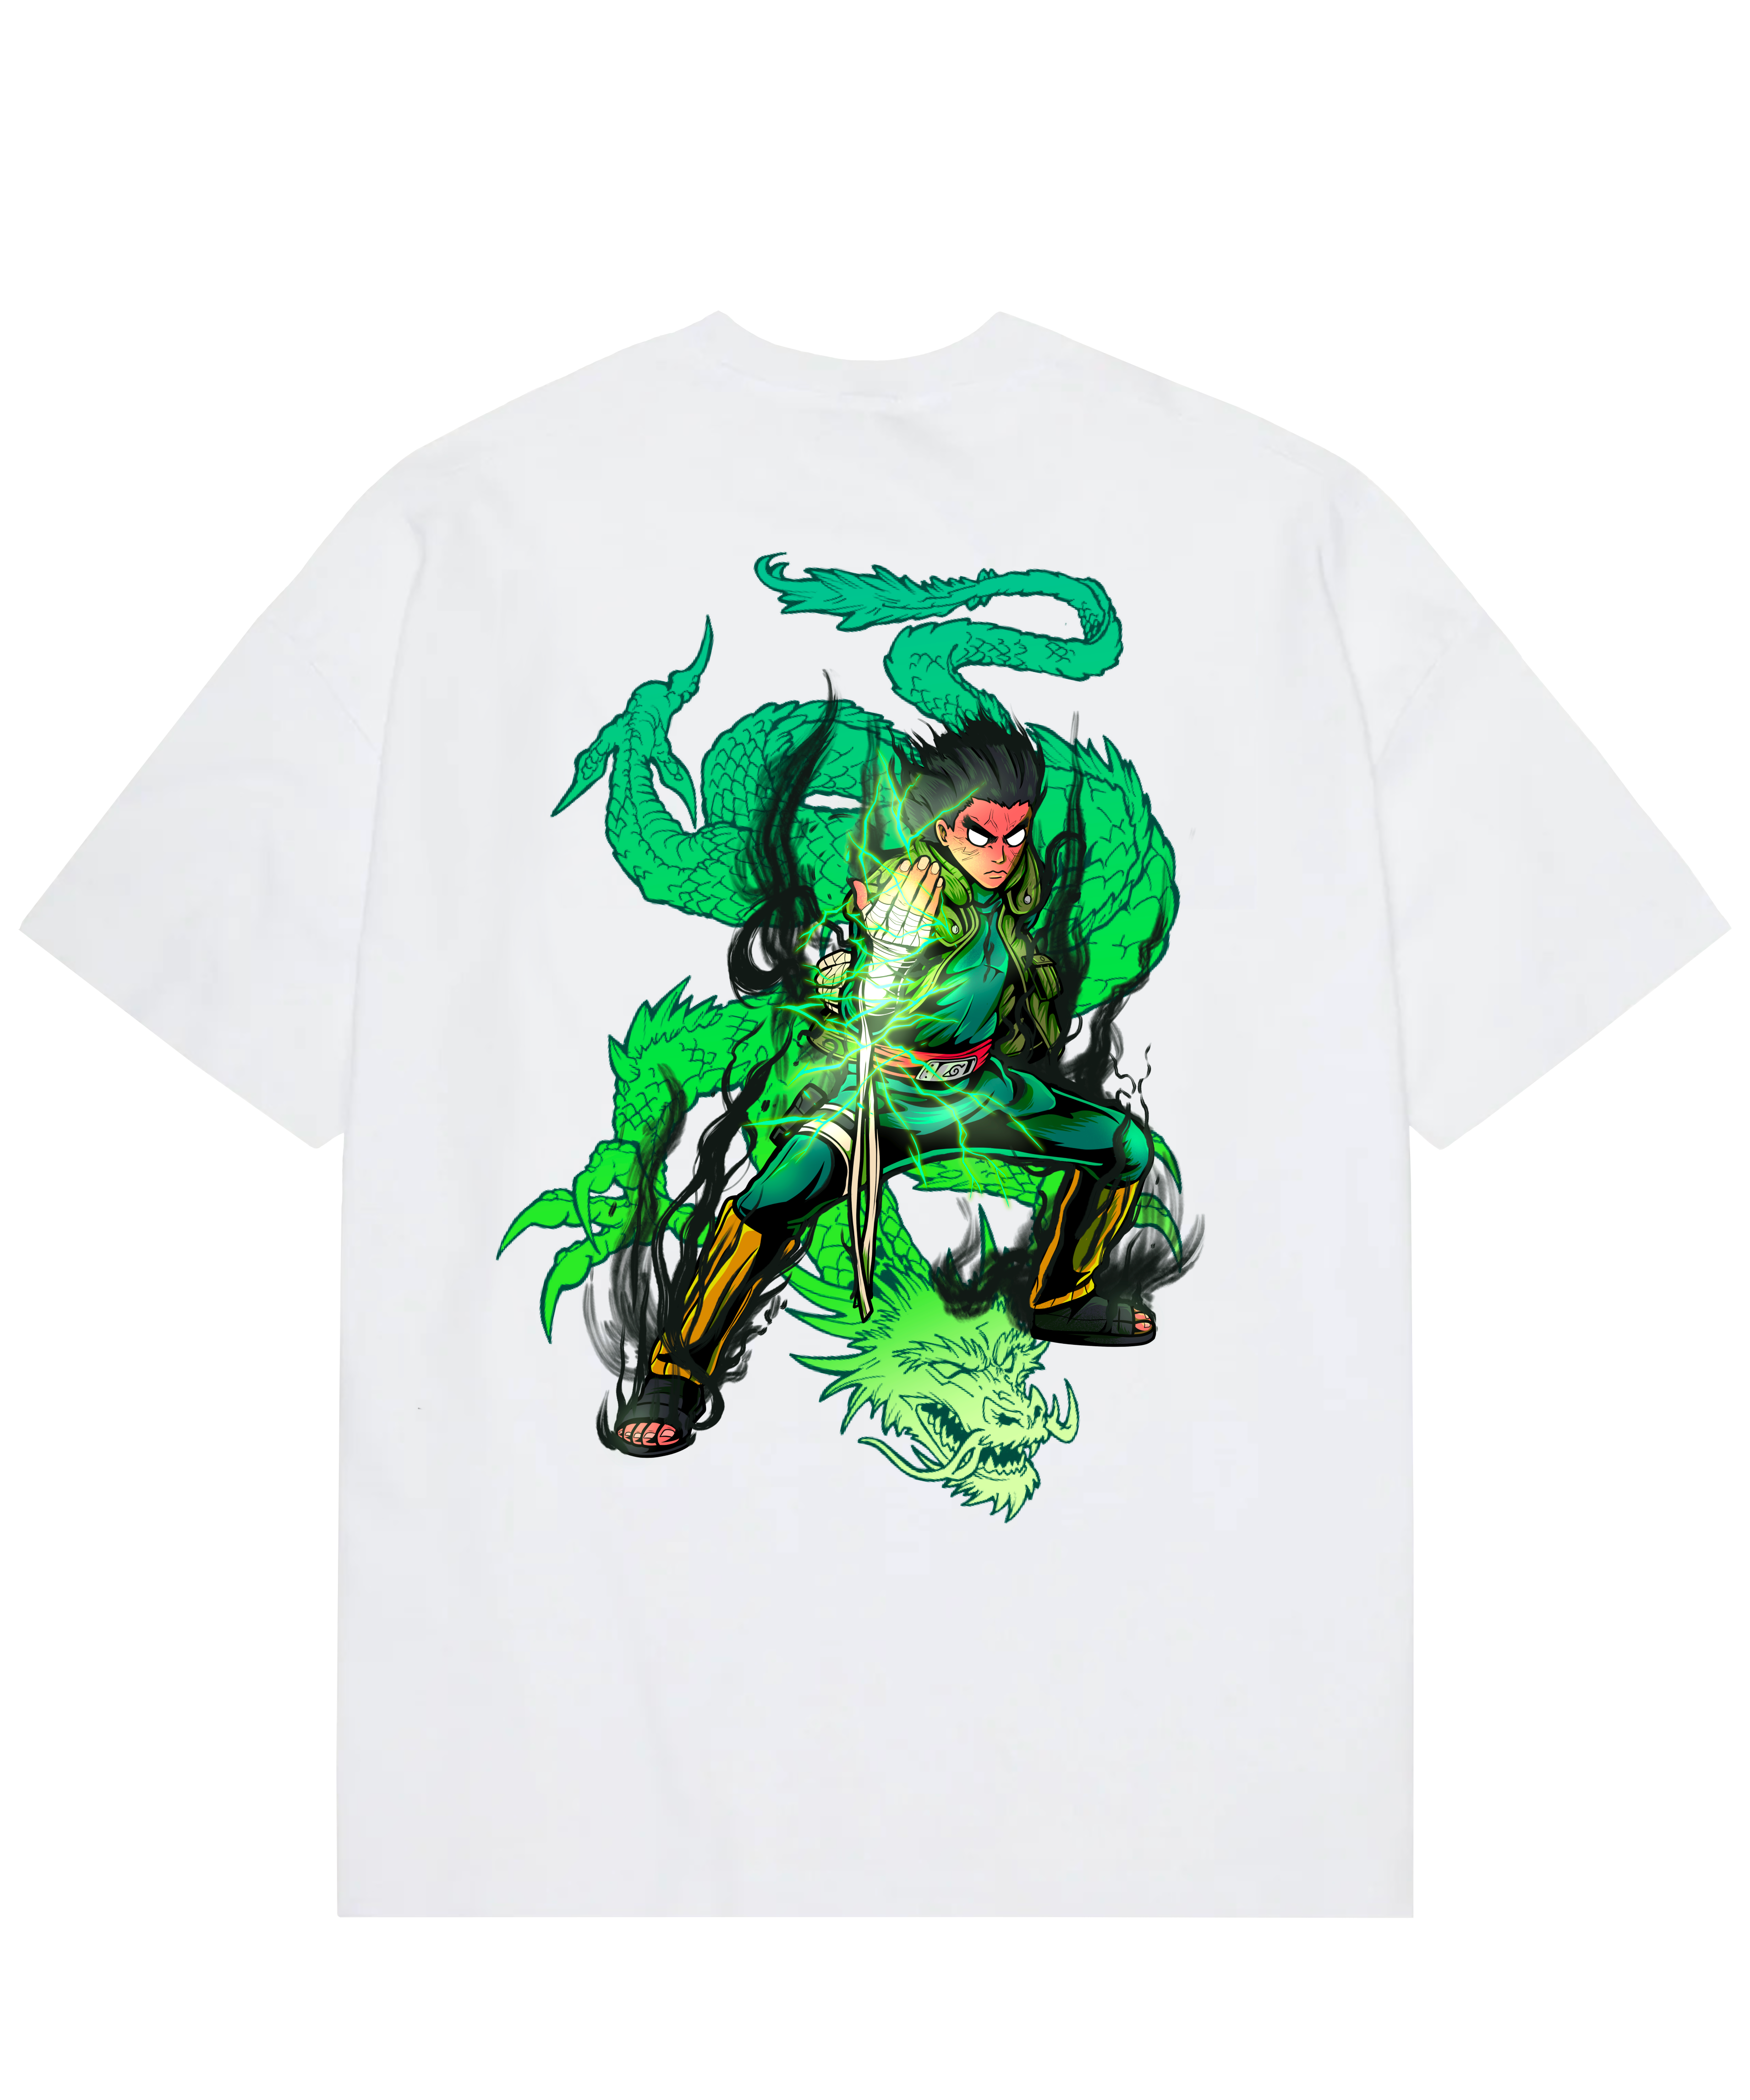 "Rock Lee X Dragon - Naruto Shippuden" T-shirt oversize